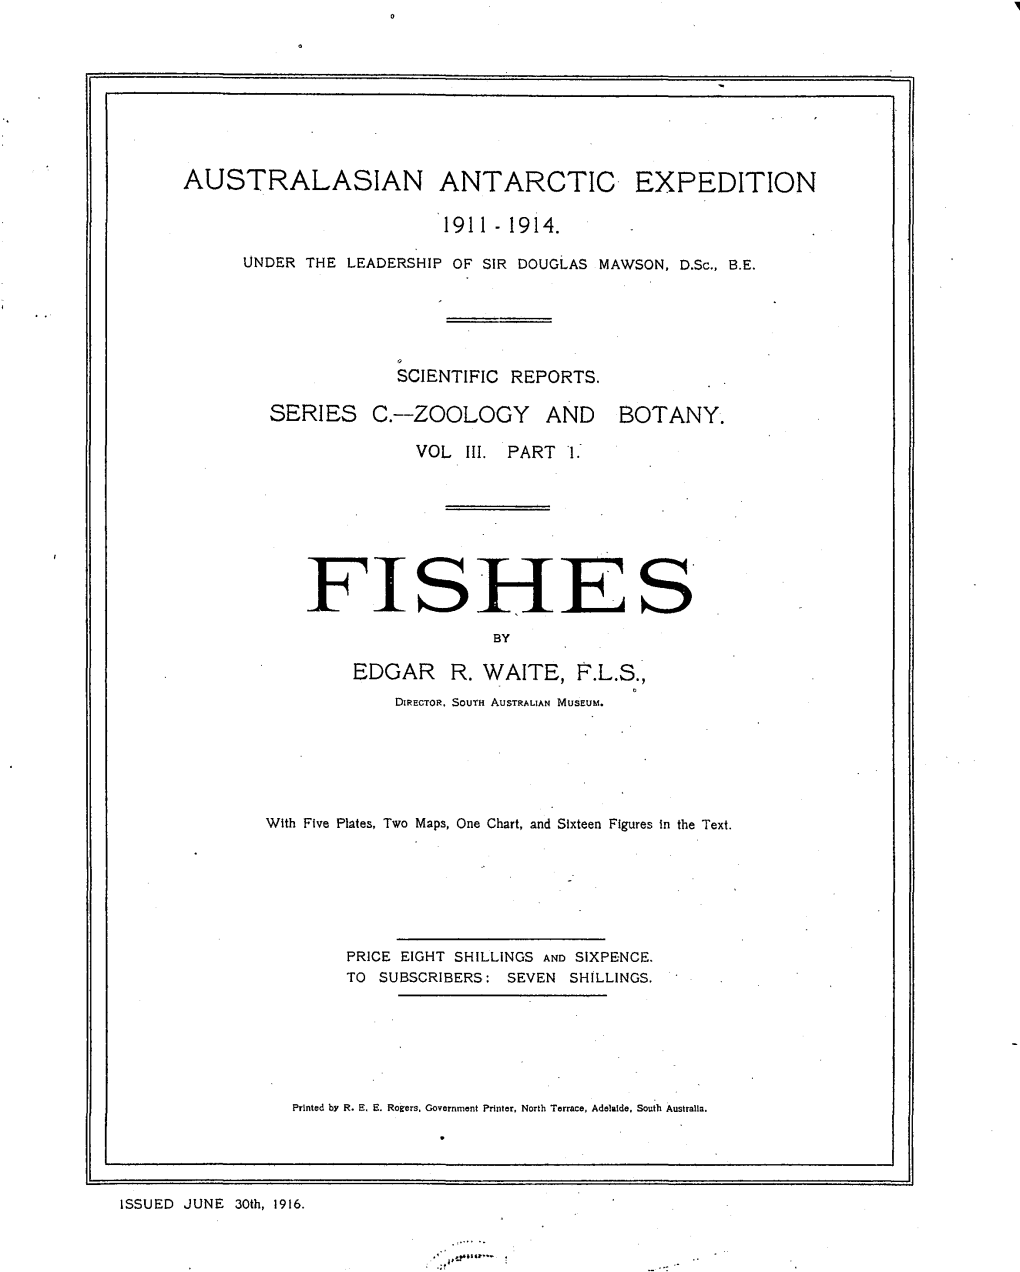 Australasian Antarctic Expedition 1911-1914